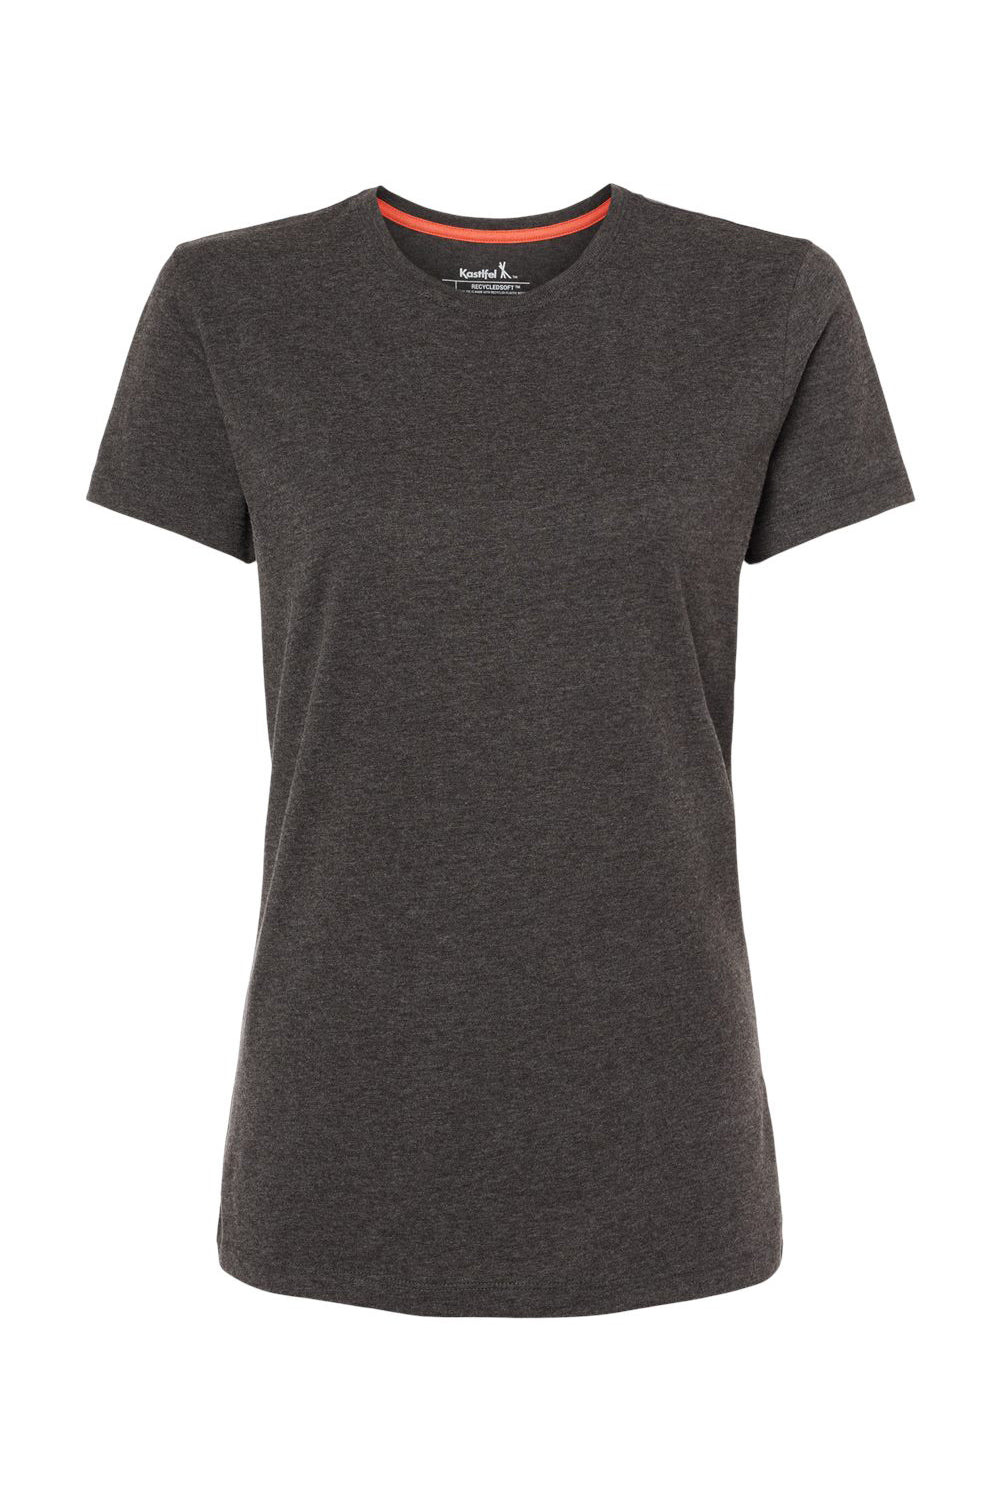 Kastlfel 2021 Womens RecycledSoft Short Sleeve Crewneck T-Shirt Carbon Grey Flat Front